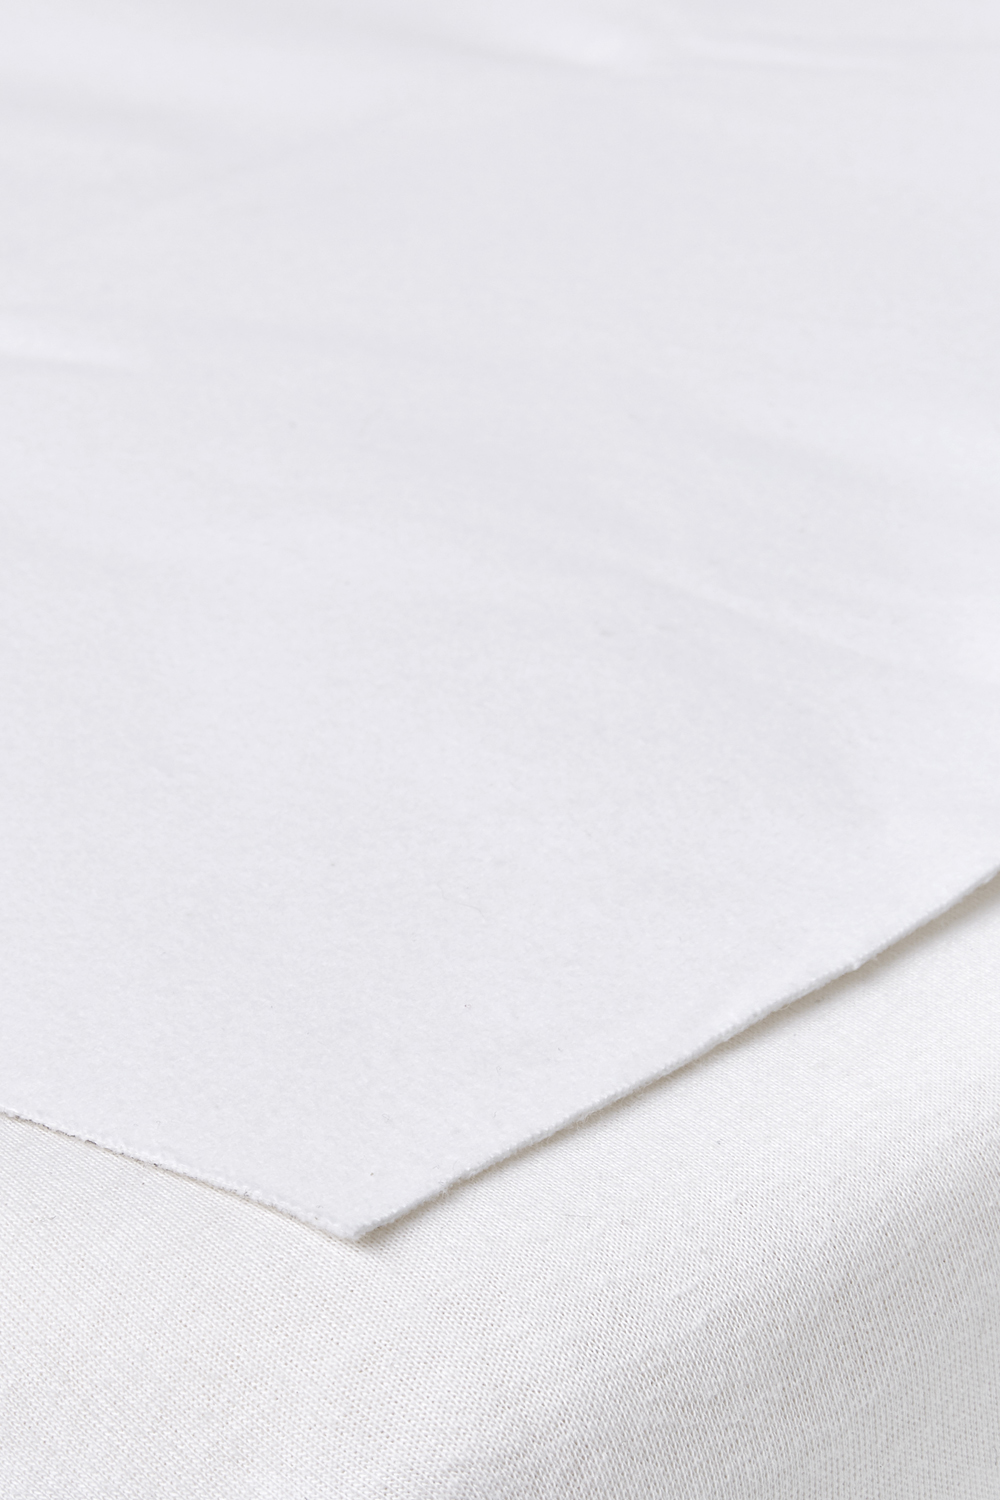 Waterproof sheet protector crib - white - 40x50cm